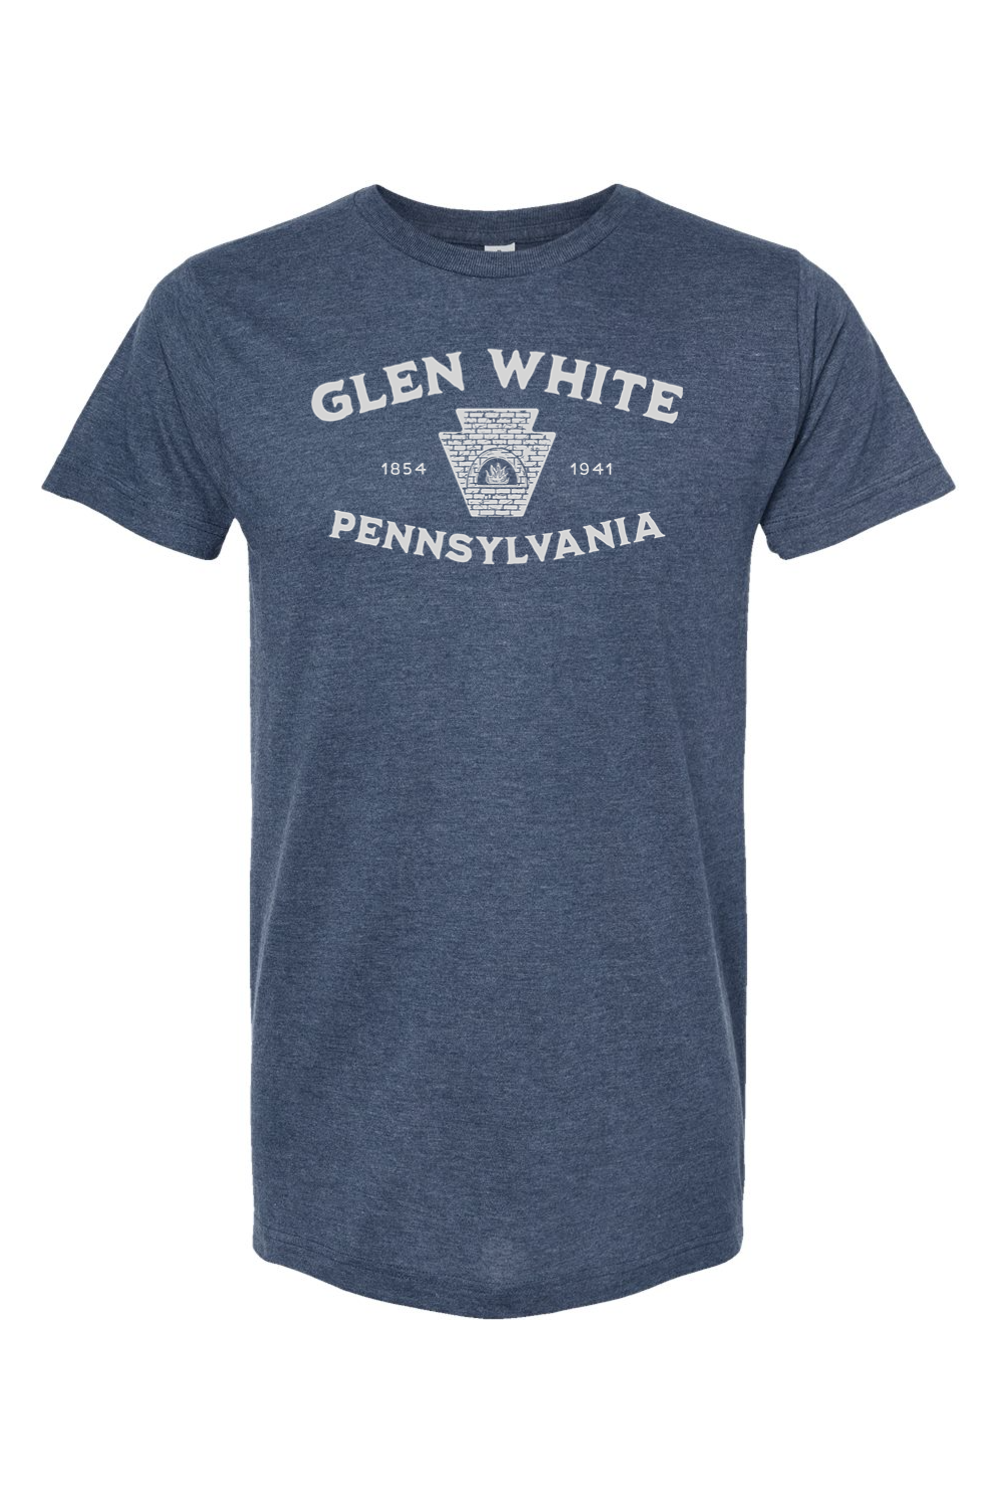 Glen White Pennsylvania - Yinzylvania